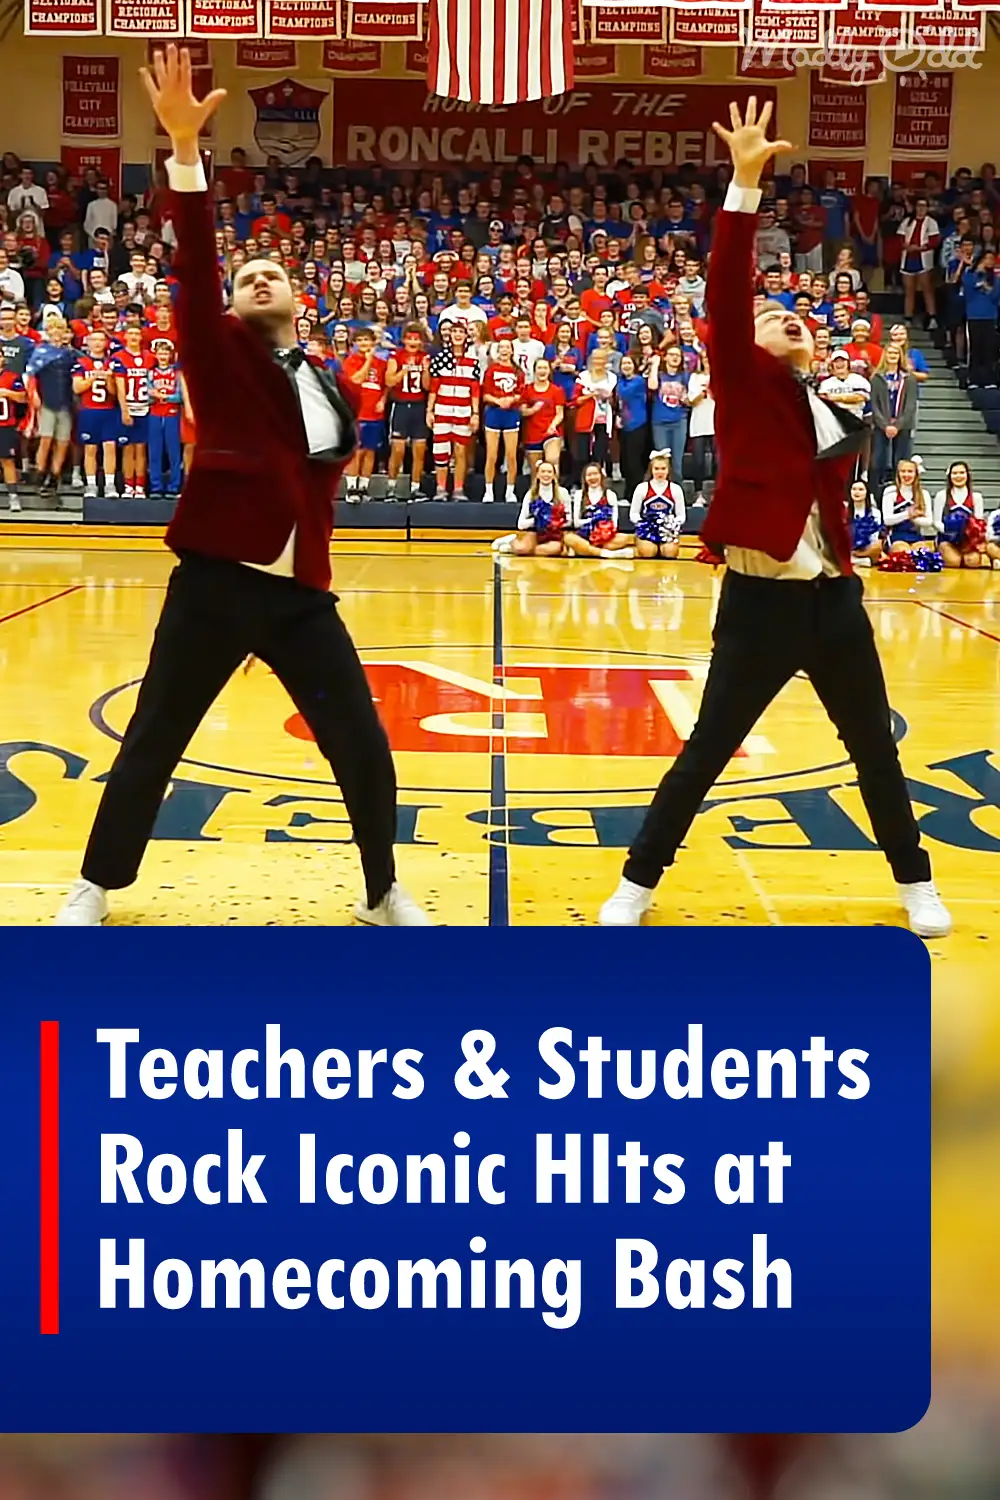 Teachers & Students Rock Iconic HIts at Homecoming Bash